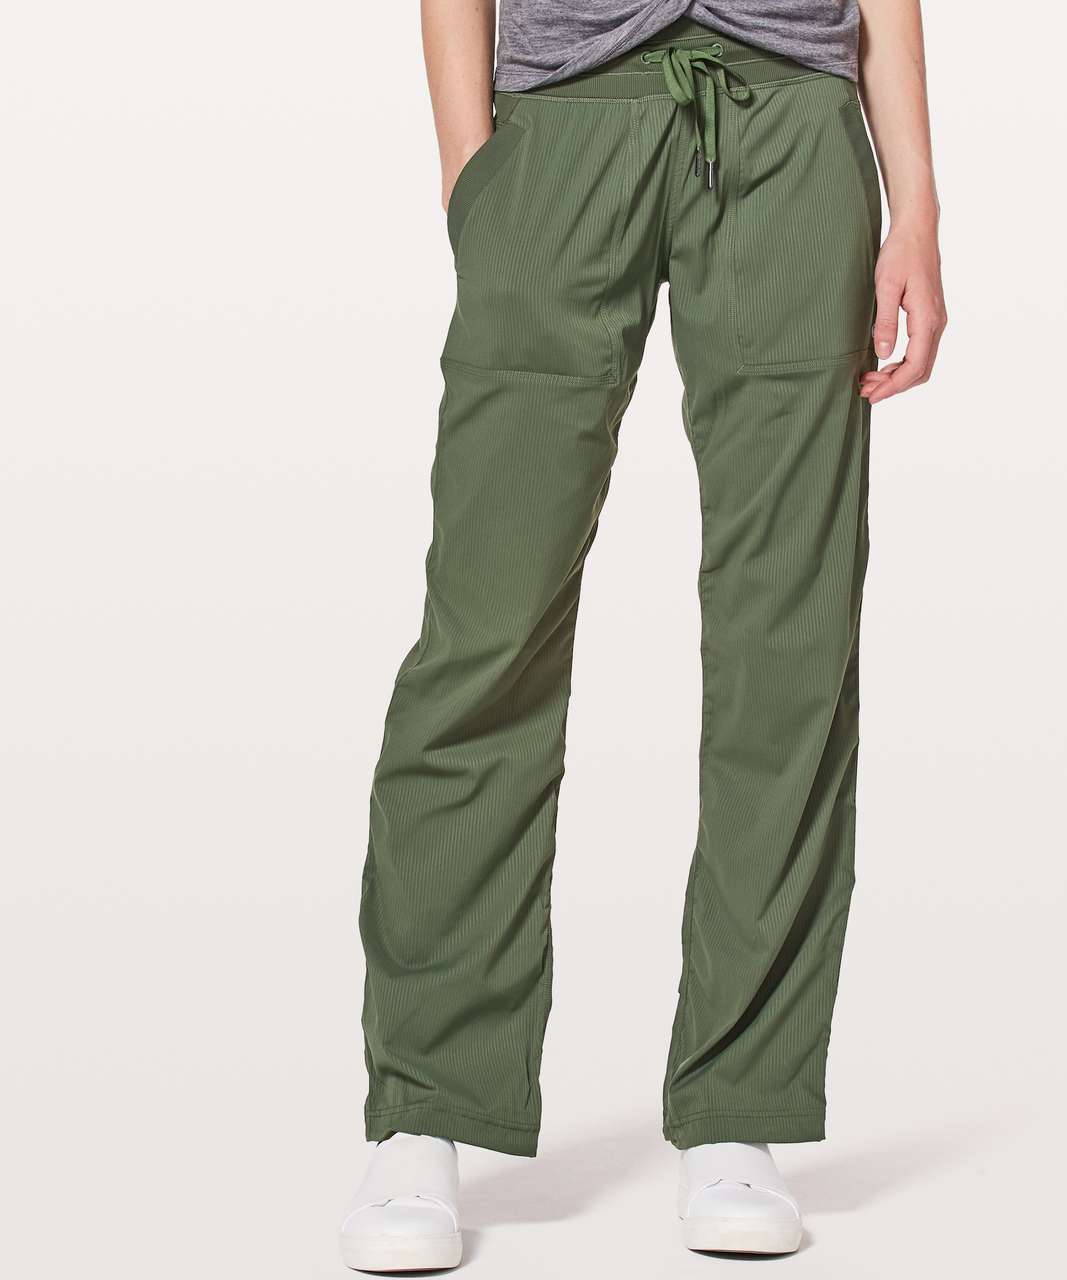 lululemon athletica, Pants & Jumpsuits, Green Lululemon Dance Studio  Pants Size 2